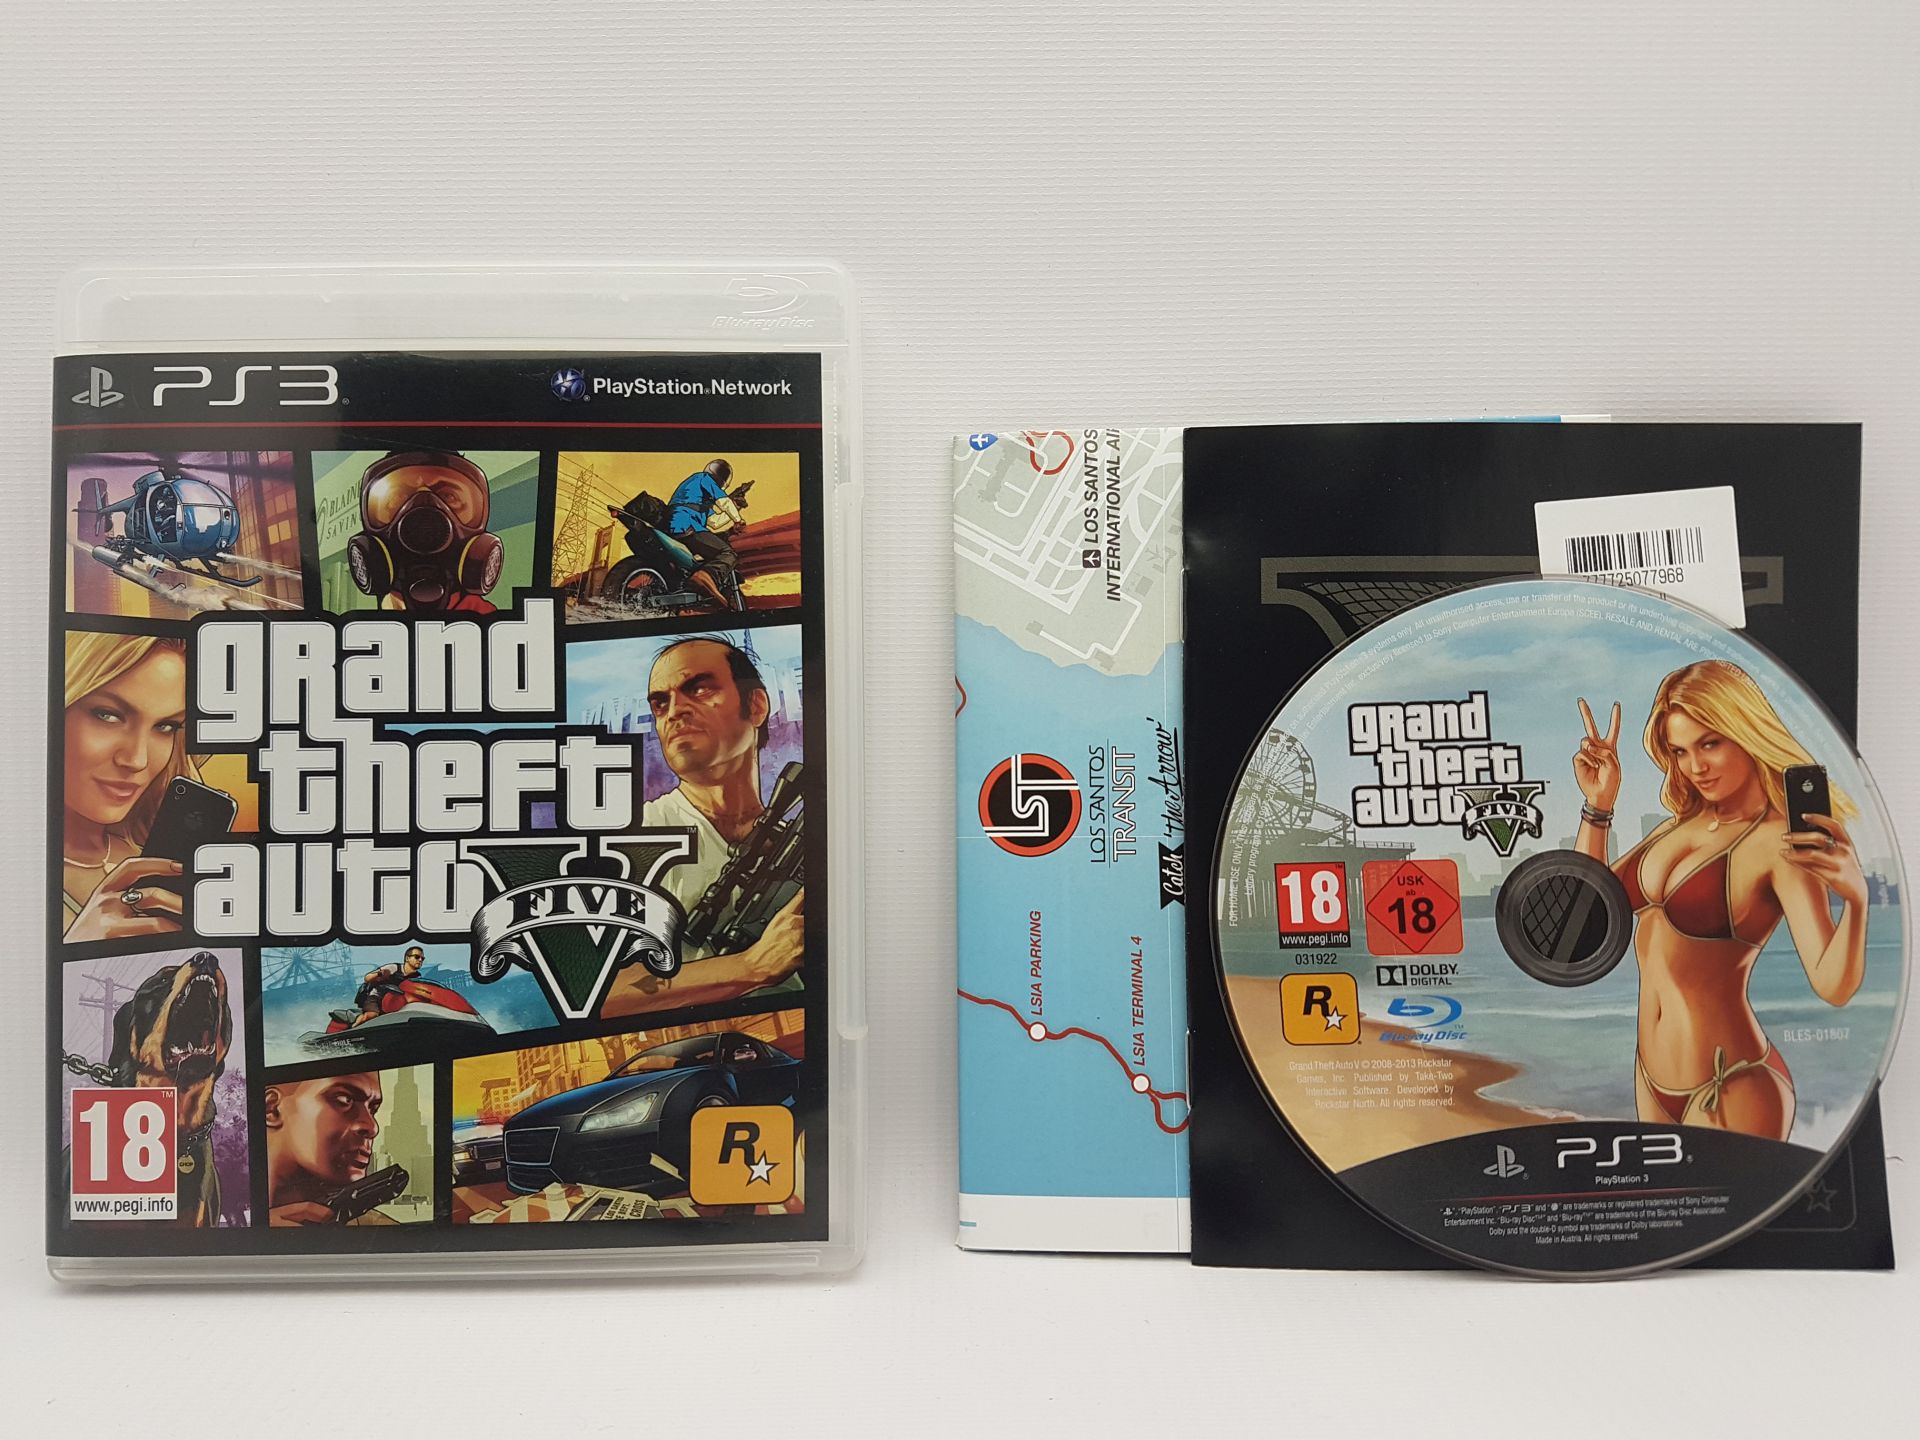 Фан фан купить гта 5. Коробка от диска ПС 3. GTA 5 ps3 мануал с диском. GTA V коробка диска. Grand Theft auto 5 обложка для коробки под диск.